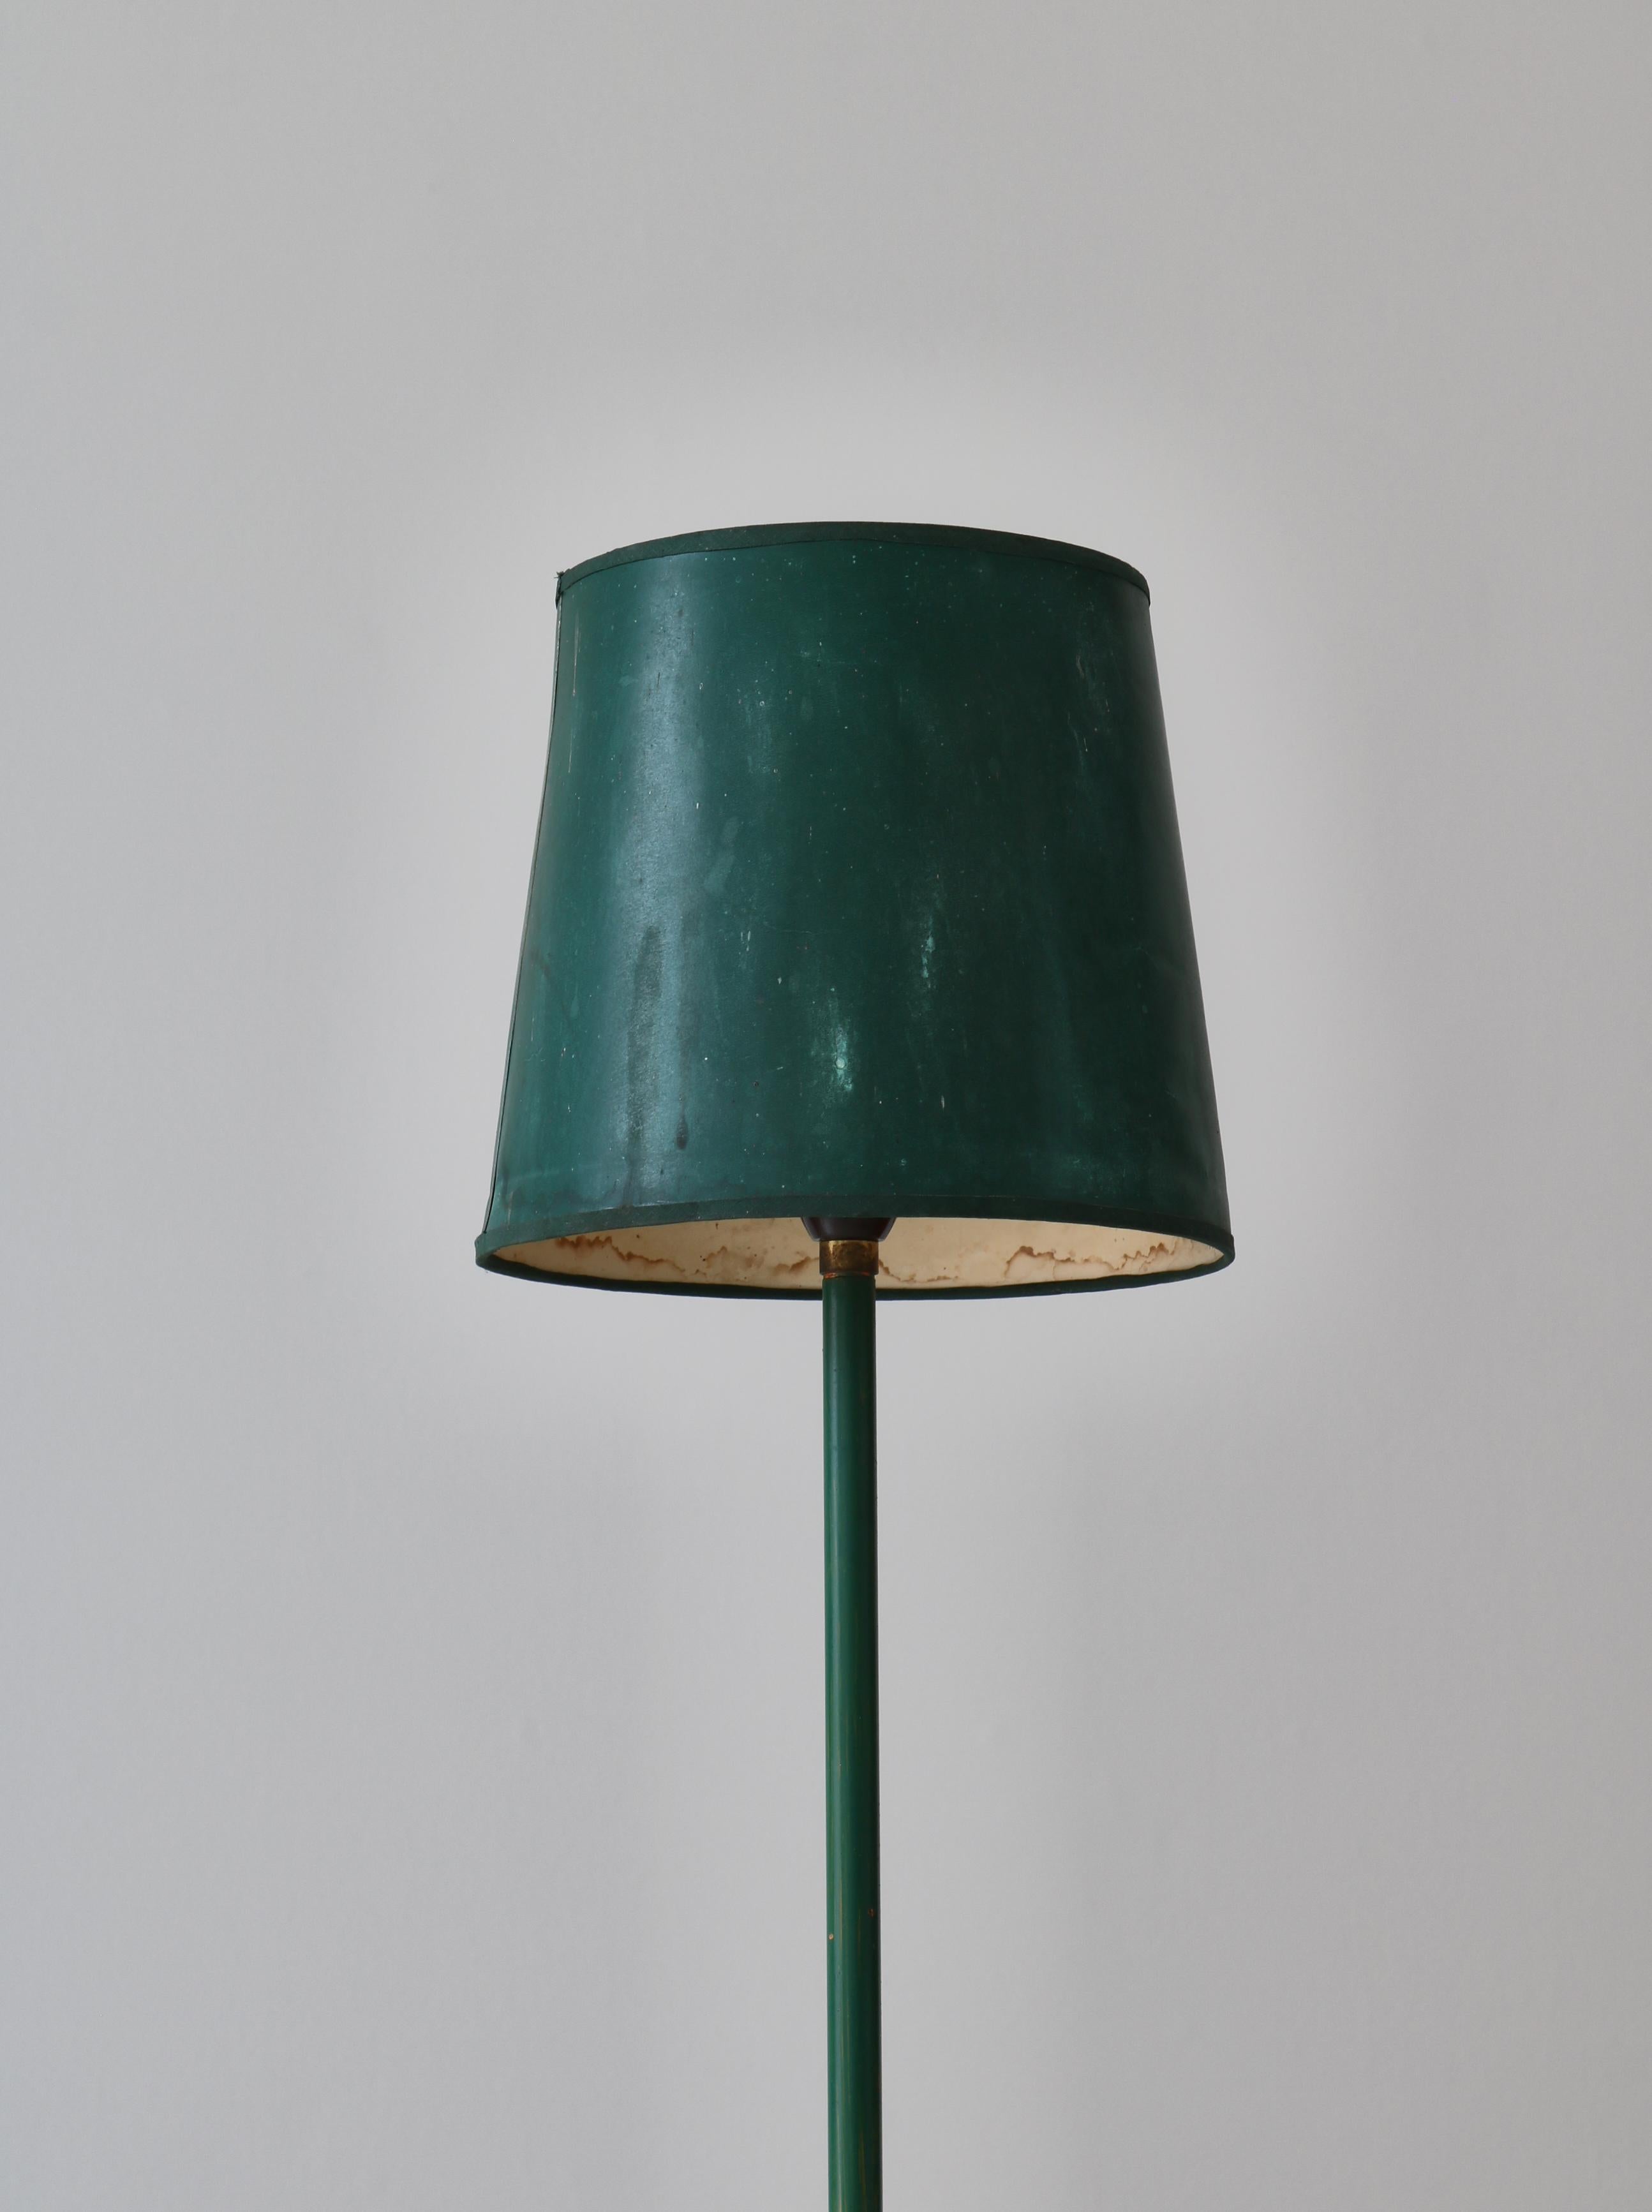 Scandinavian Modern Floor Lamp Green Lacquered Metal, 1940s For Sale 2